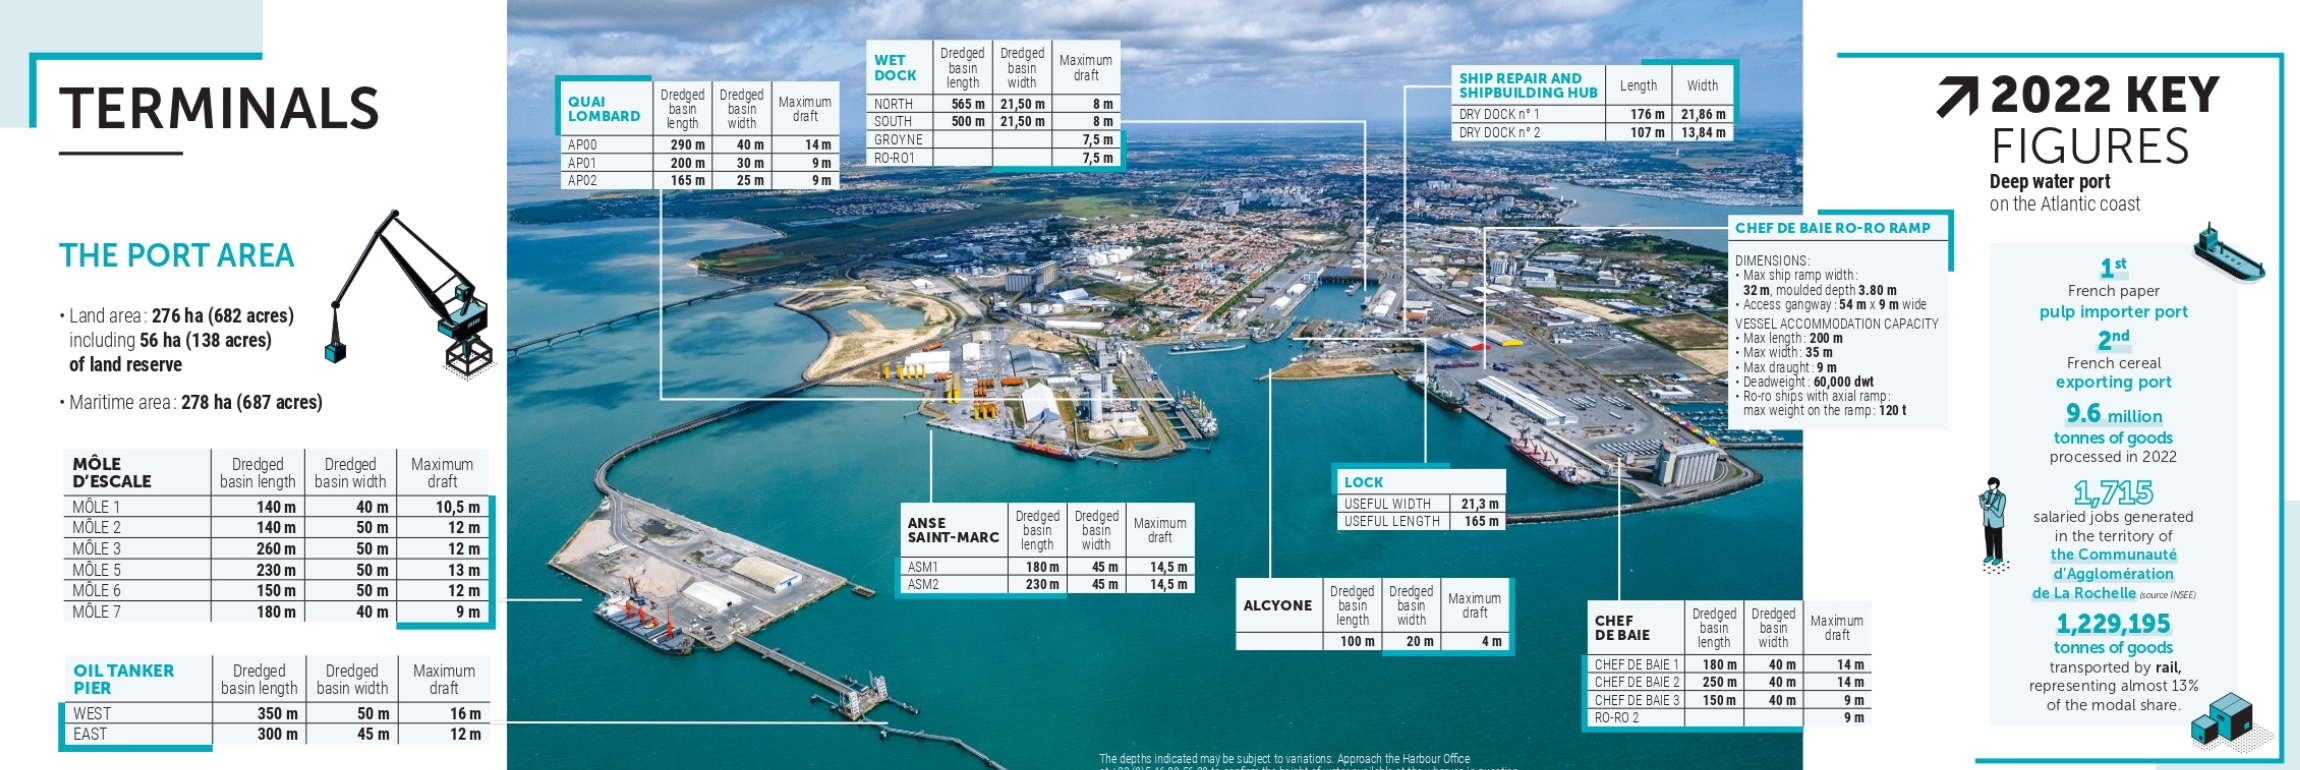 Port terminals & key datas 2022png